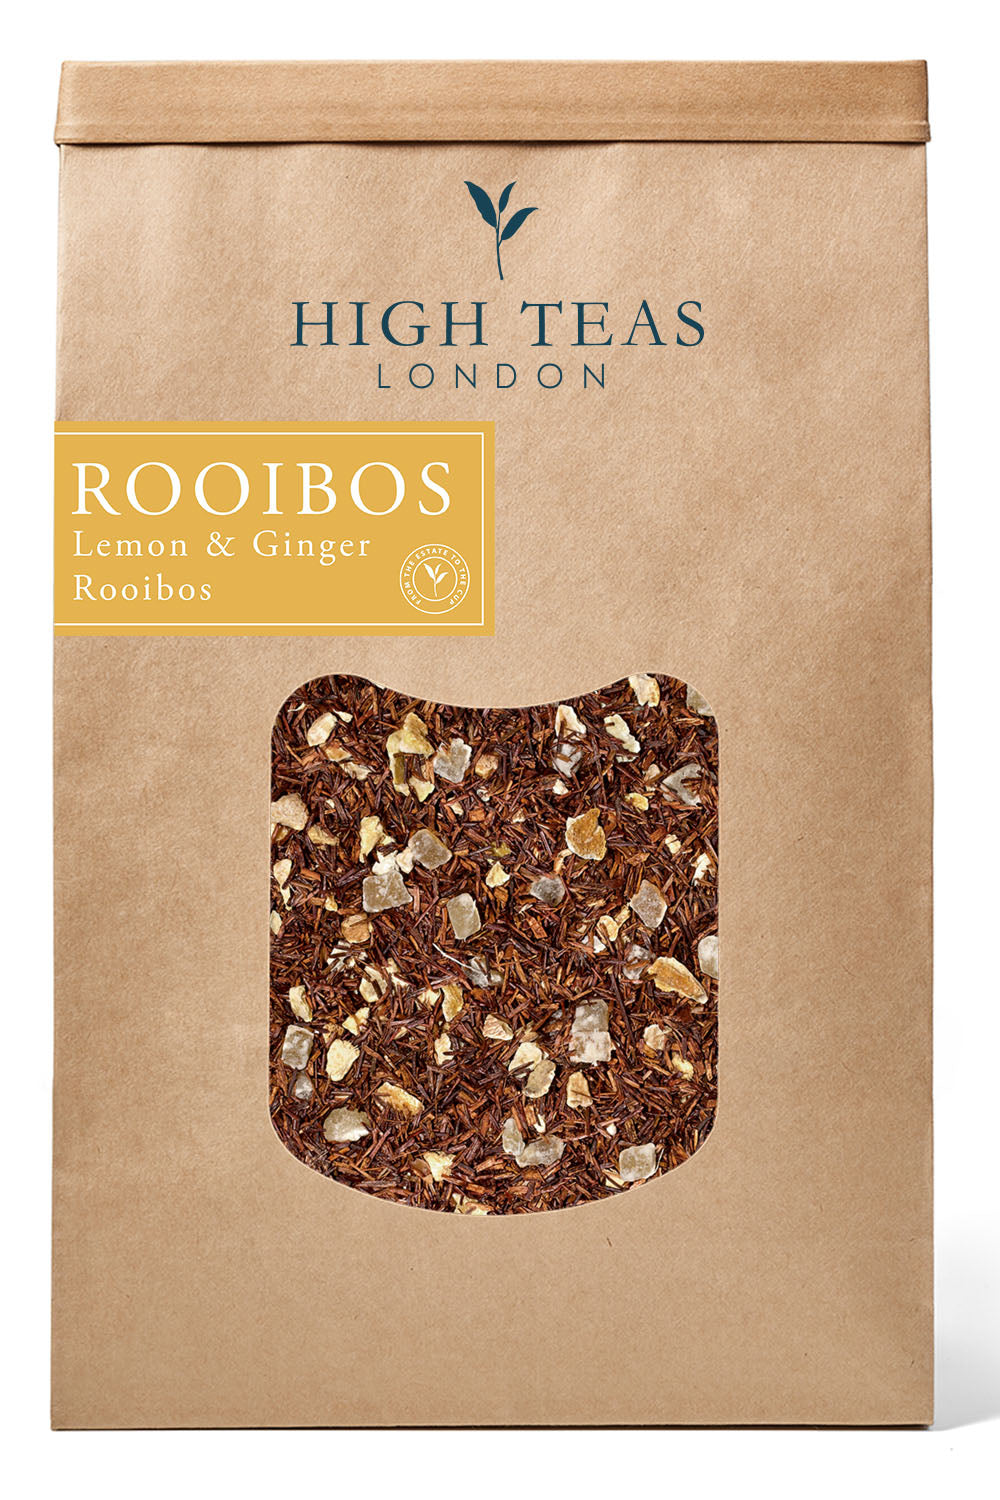 Lemon & Ginger Rooibos-500g-Loose Leaf Tea-High Teas